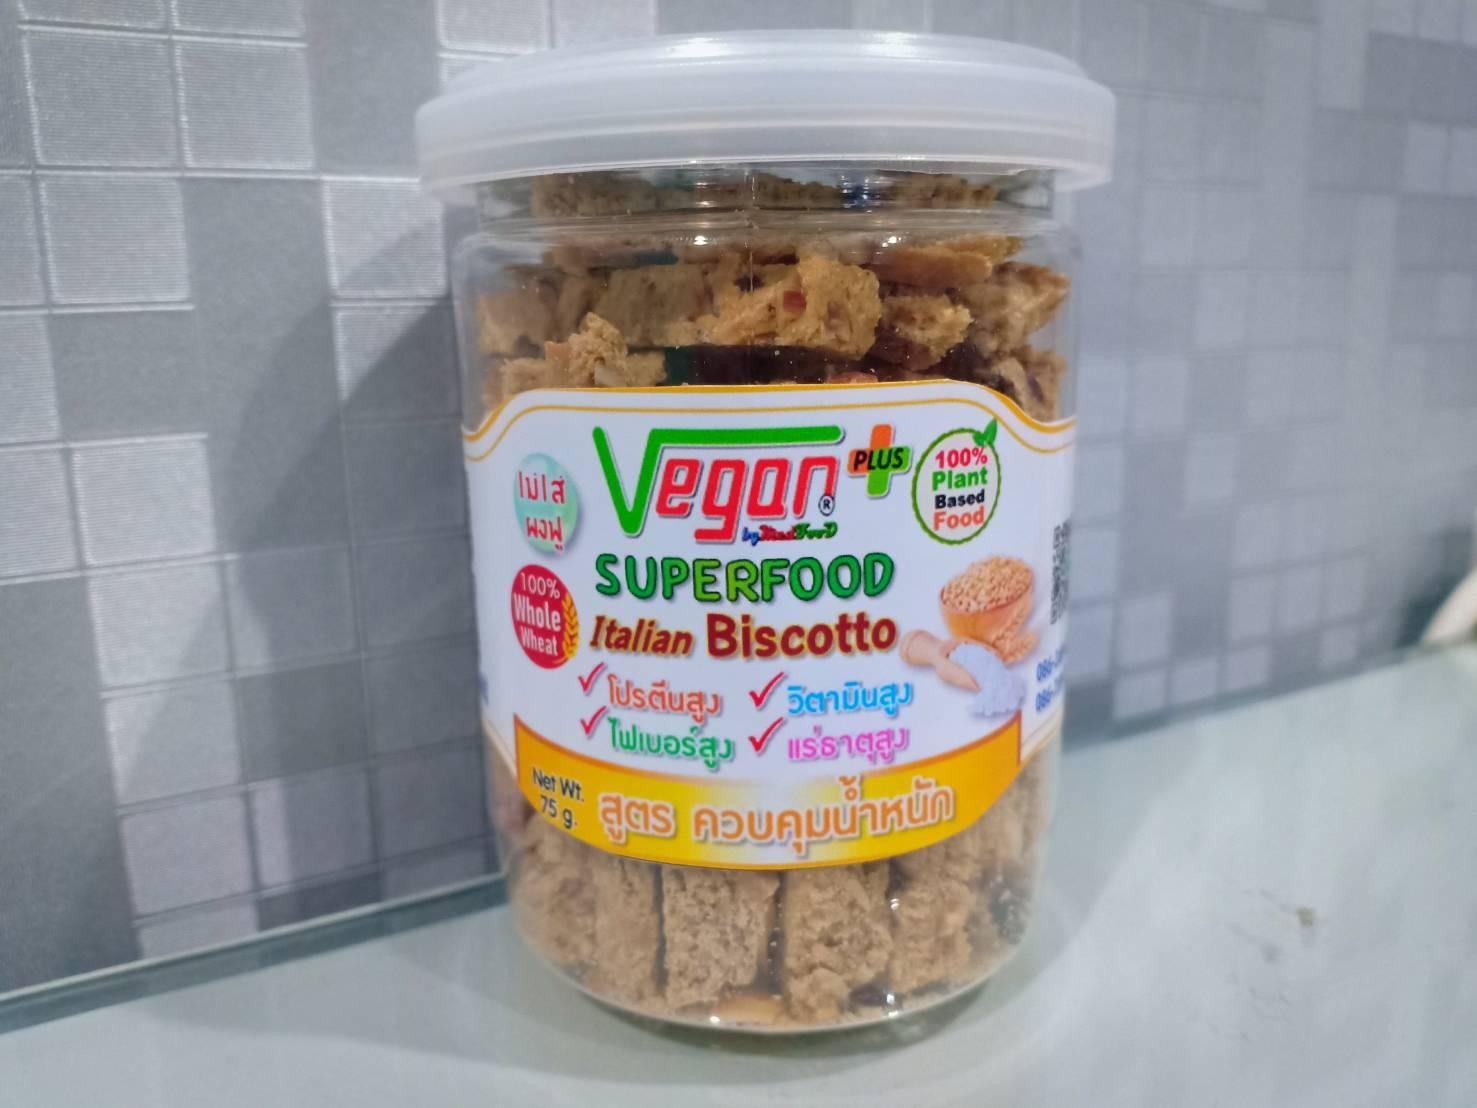 Super Food Biscotto สูตรควบคุมน้ำหนัก ขนาด 65 กรัม #เจ #มังสวิรัติ #วีแกน #Vegan #SuperFood